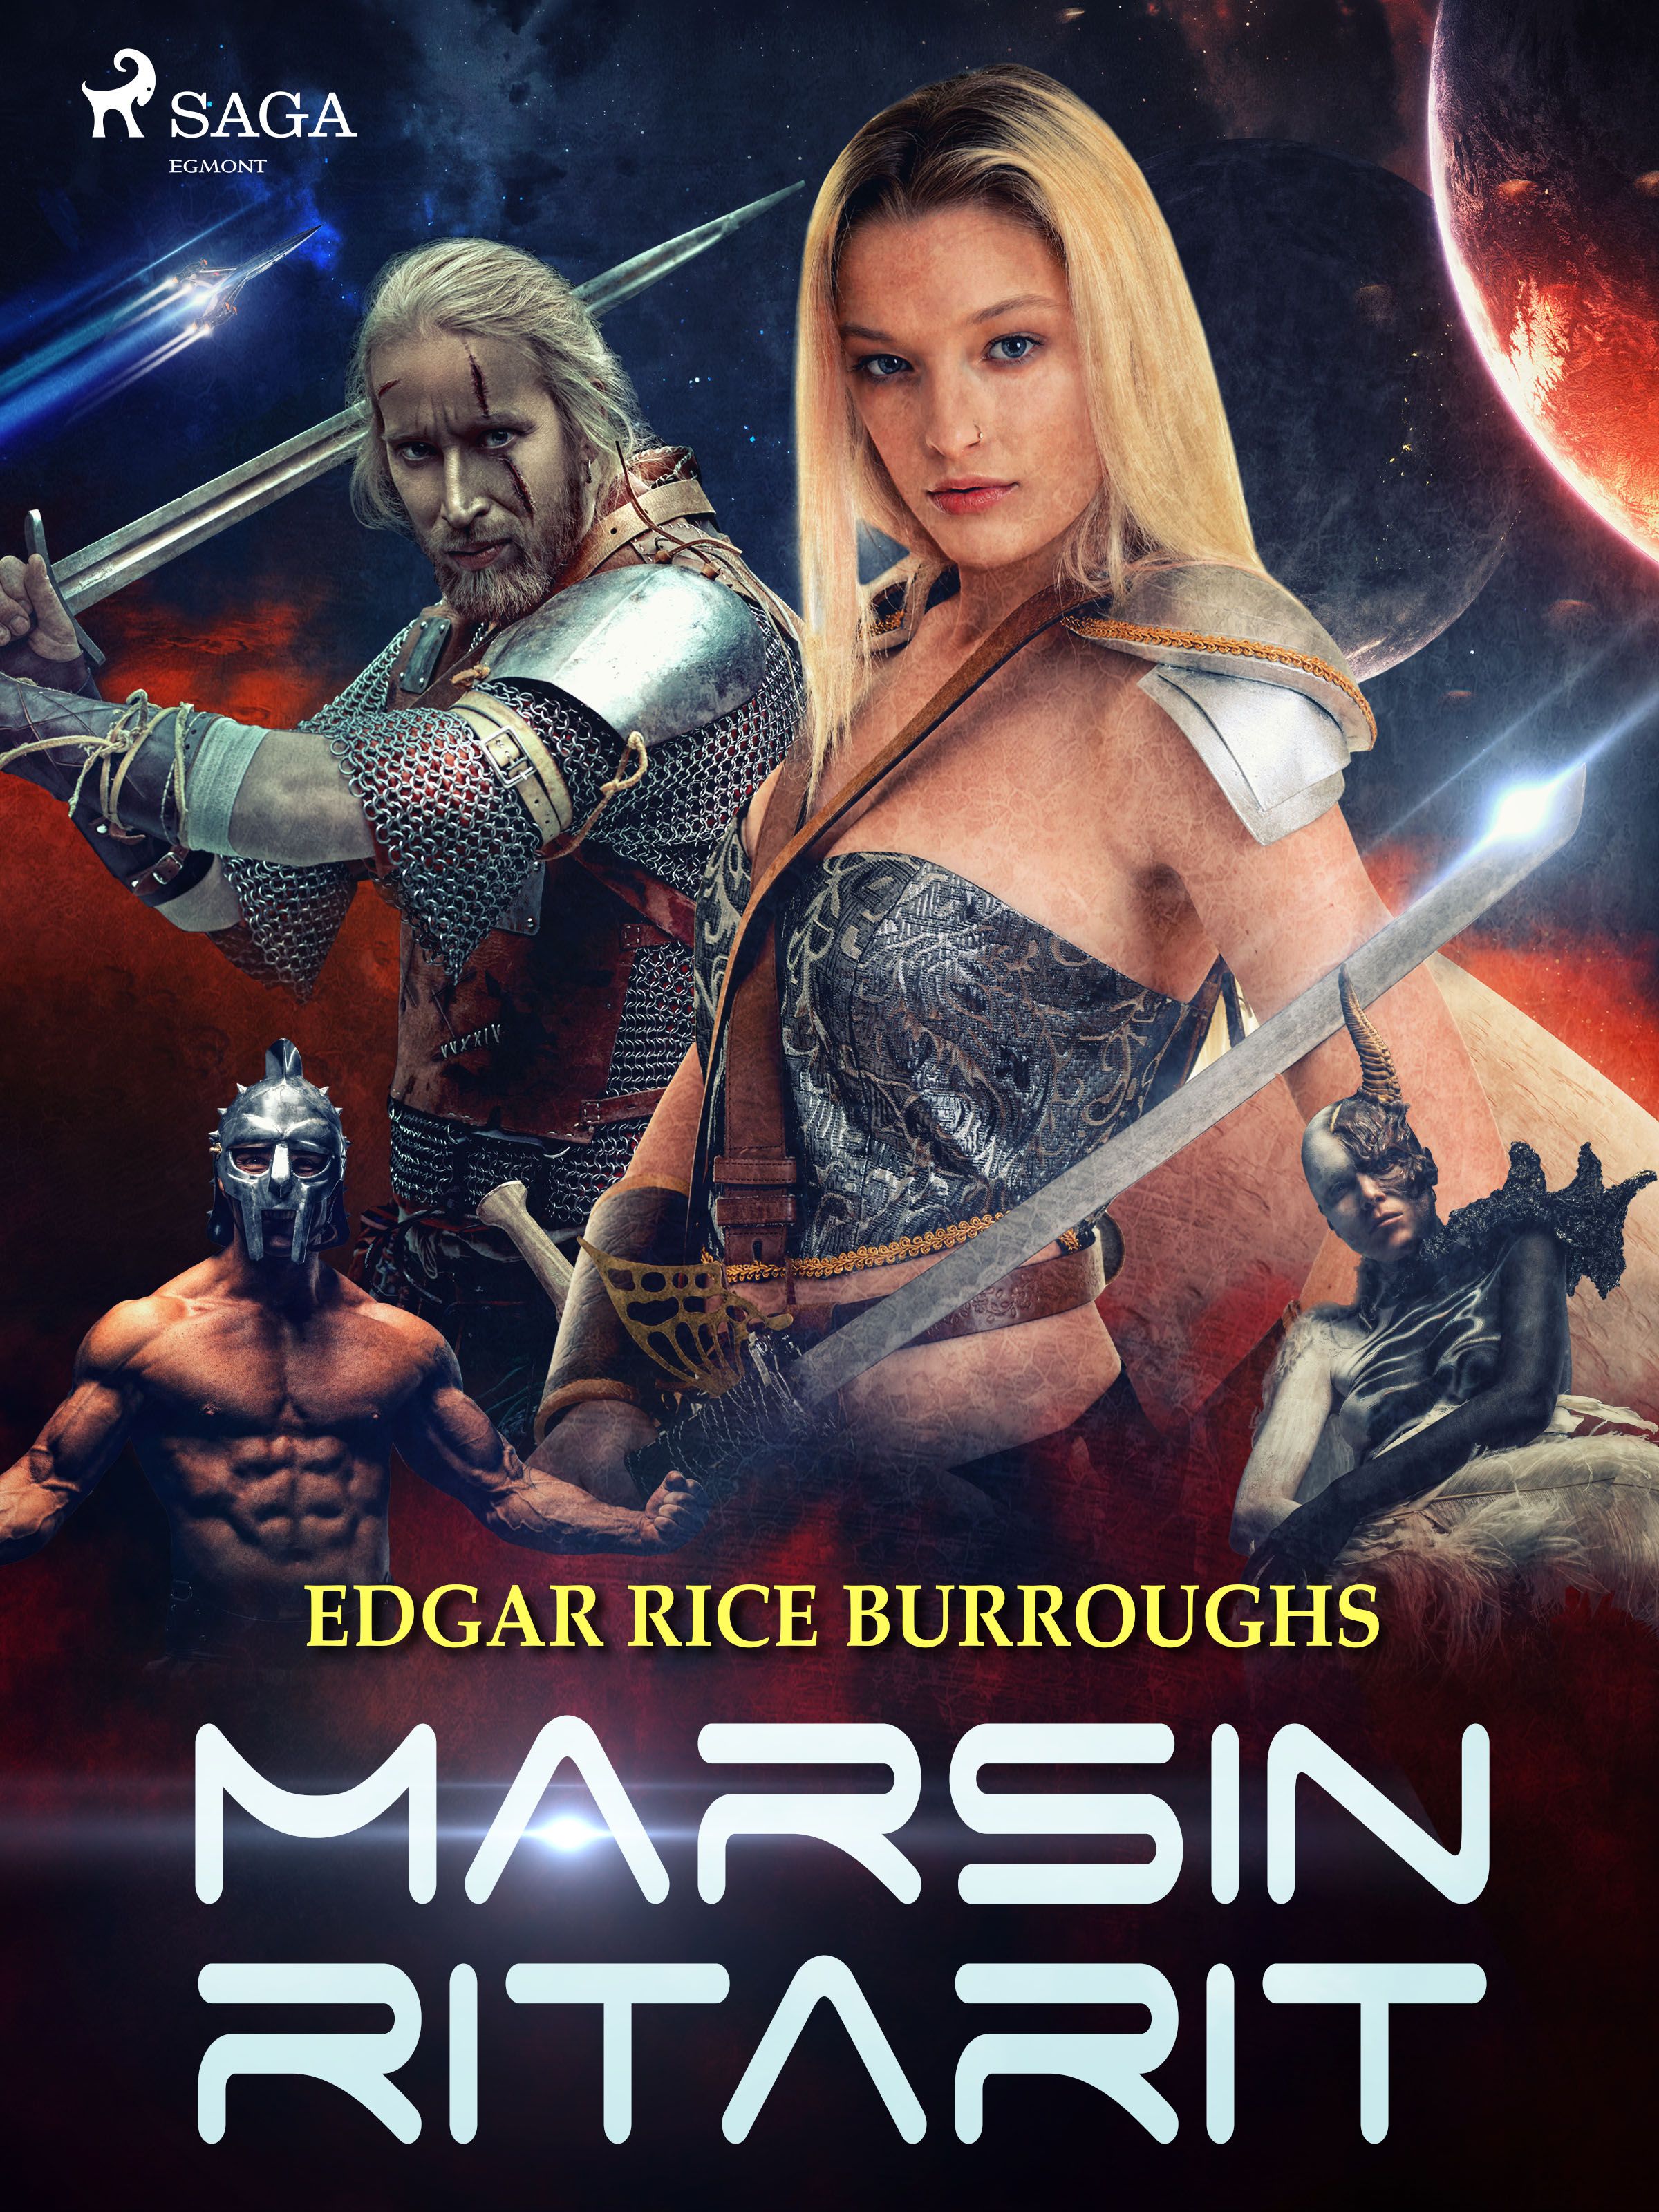 Marsin ritarit, eBook by Edgar Rice Burroughs